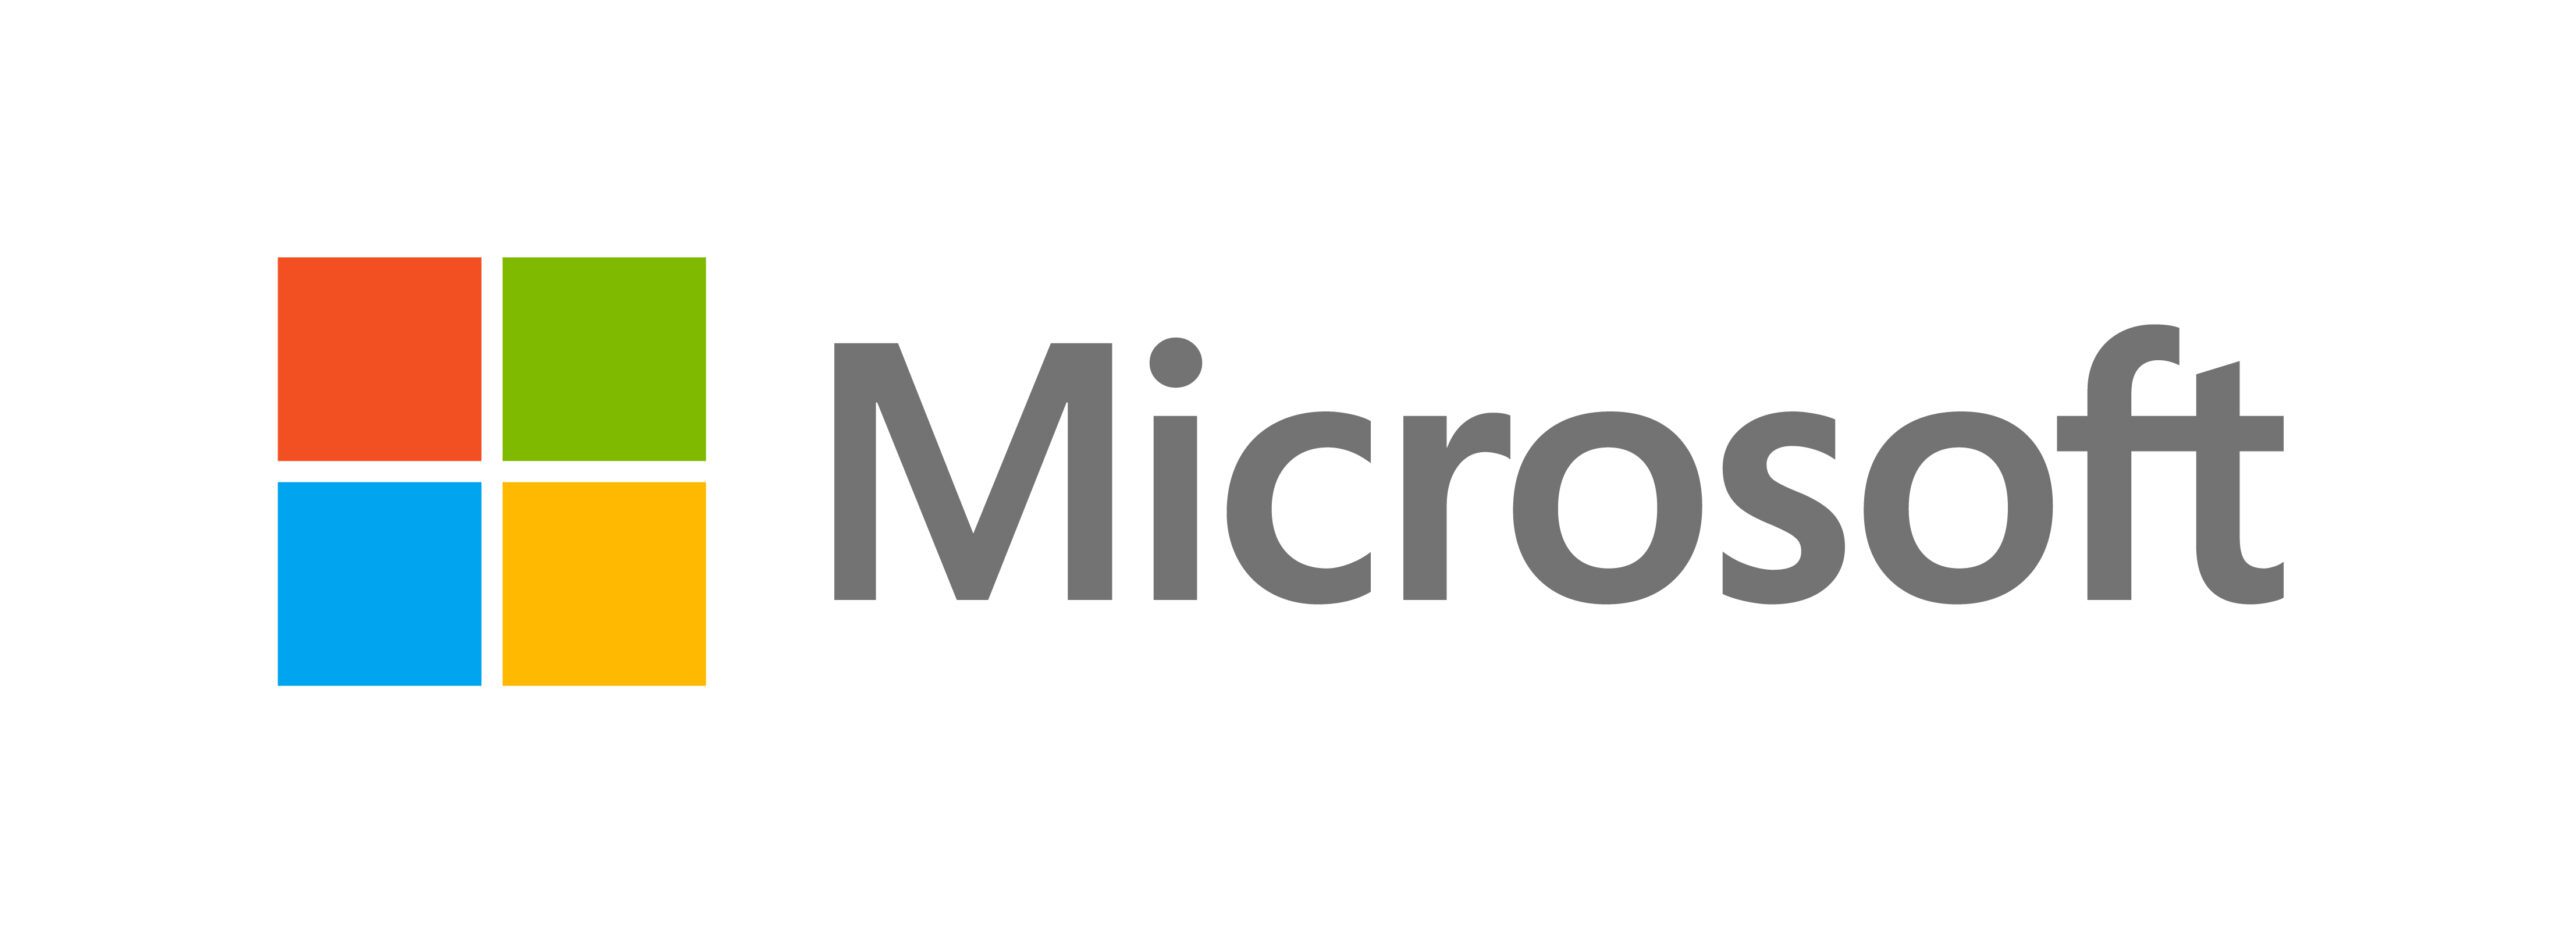 Microsoft Logo - Teroxlab